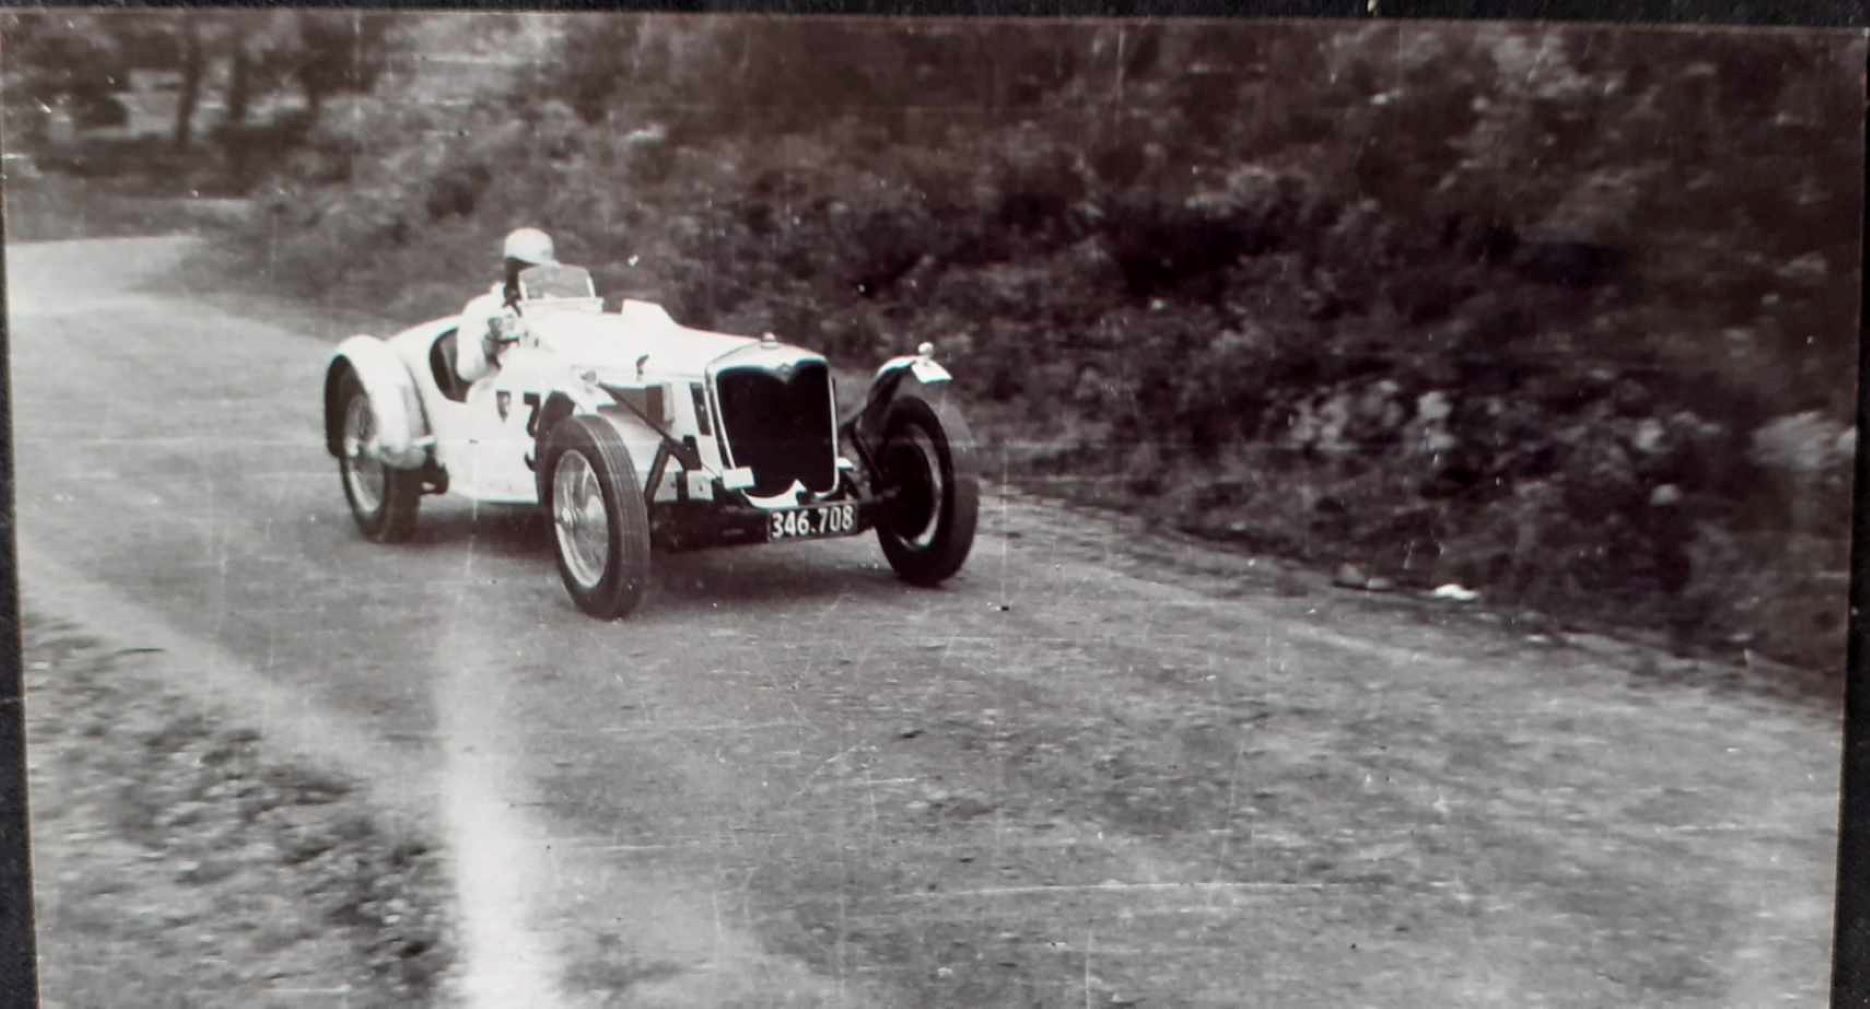 Name:  NSCC 1950 #0122 Riley Race #3 Q at Hill Climb - 346.708 1951 -56 plate 1950's - image Graeme Wel.jpg
Views: 194
Size:  178.4 KB